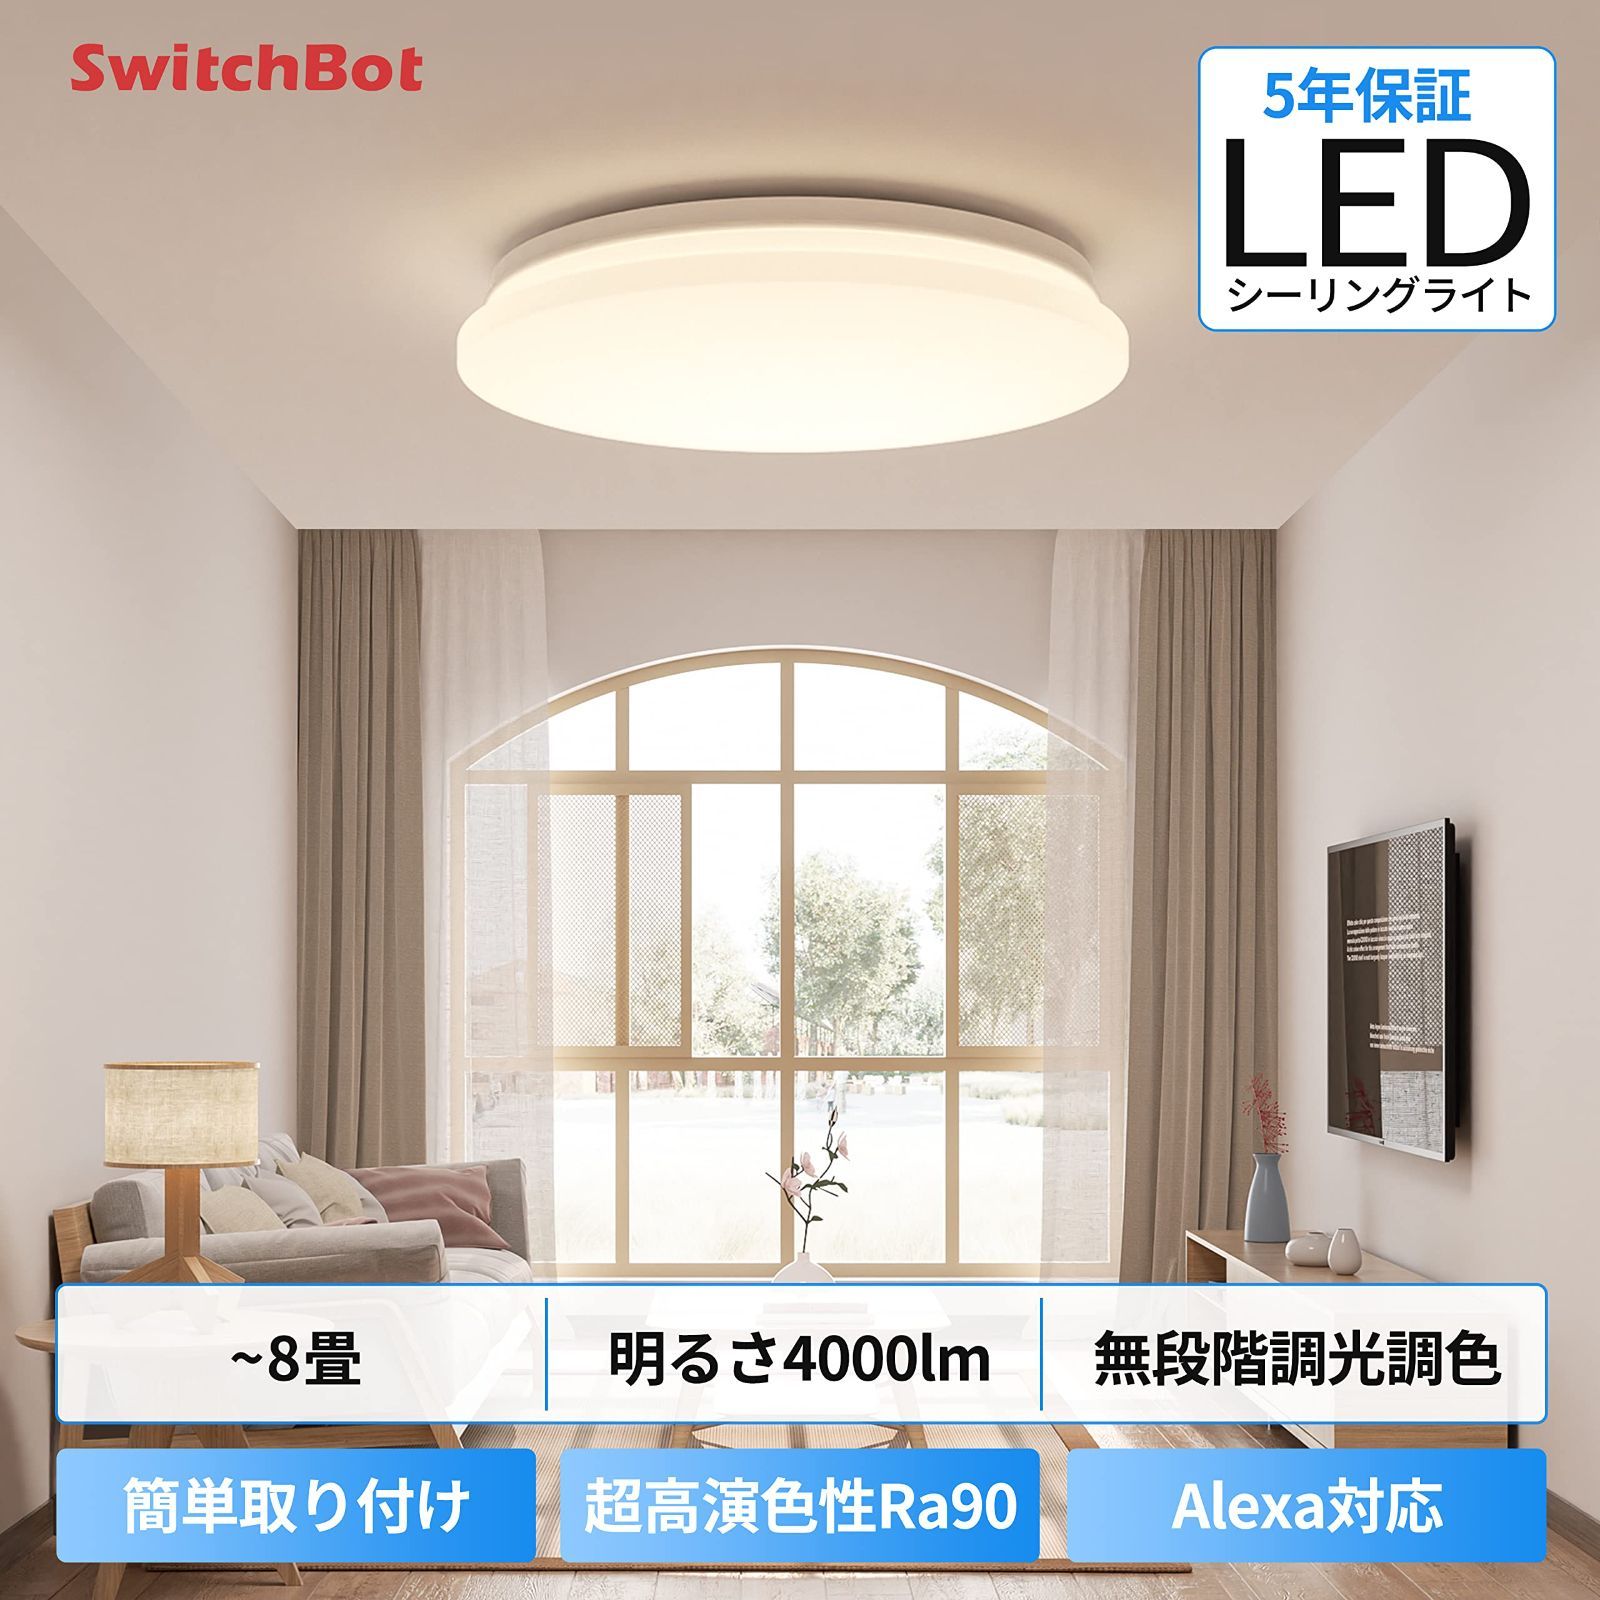 Switch bot LEDシーリングライト 未使用品 - シーリングライト・天井照明